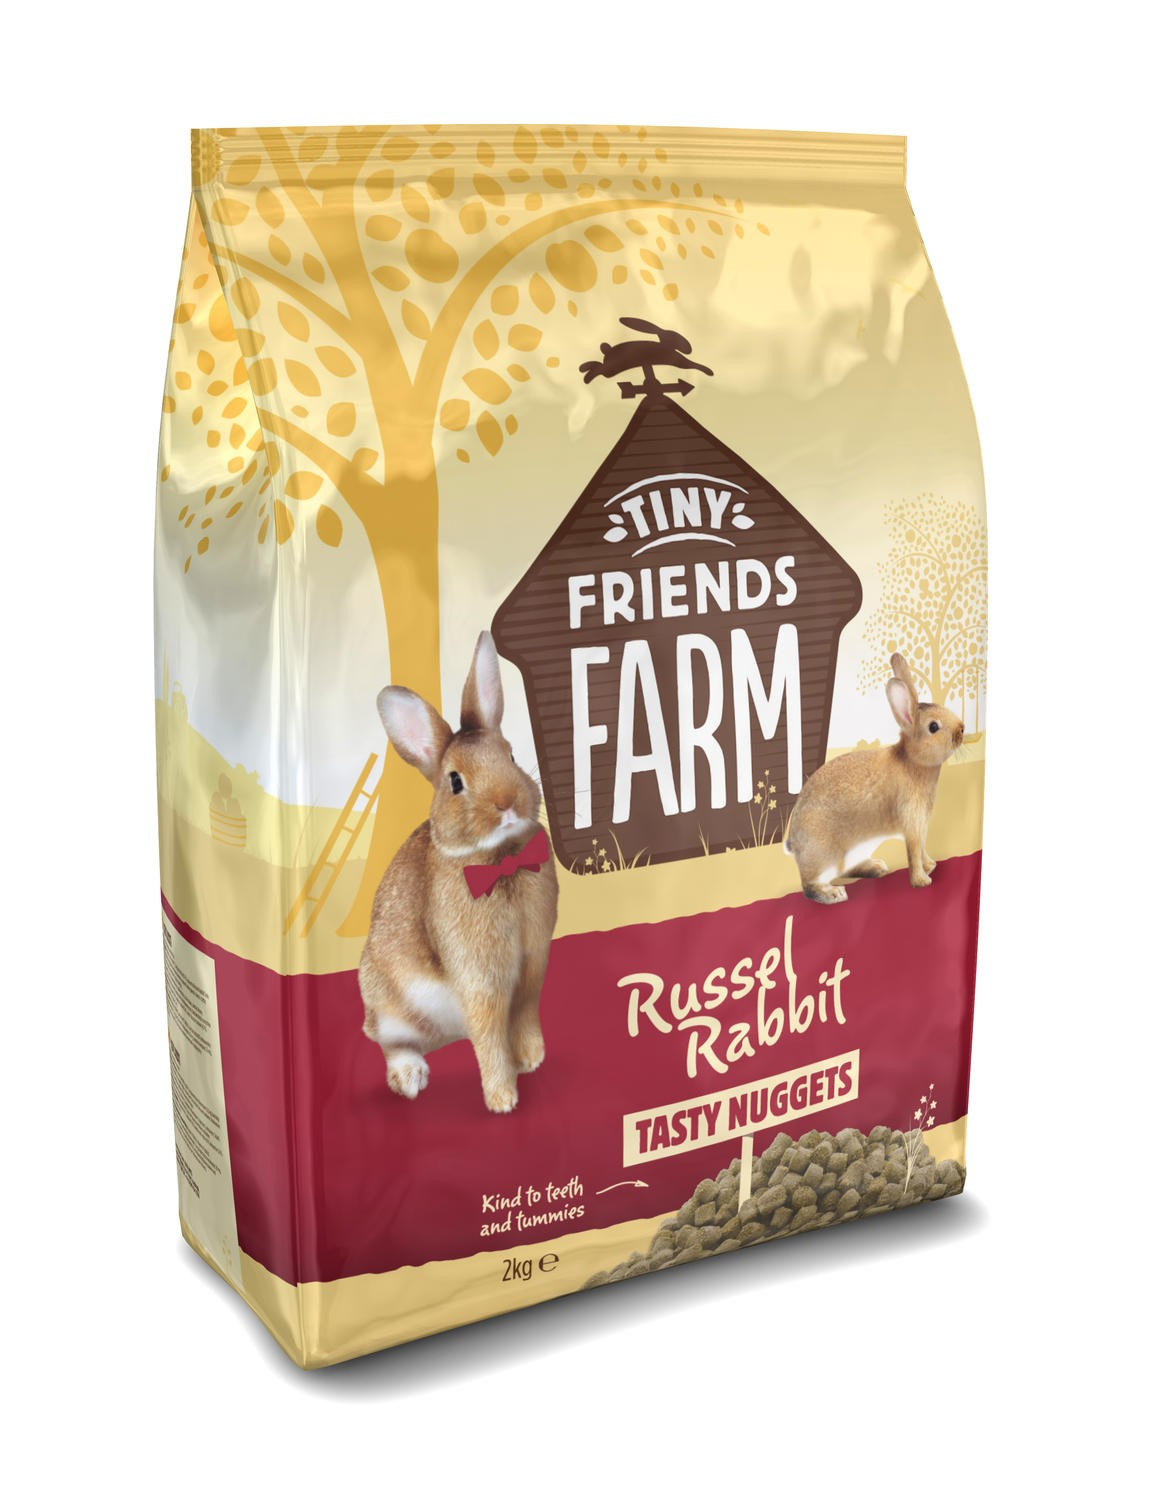 Tiny Friends Farm Russell Rabbit Tasty Nuggets coelho